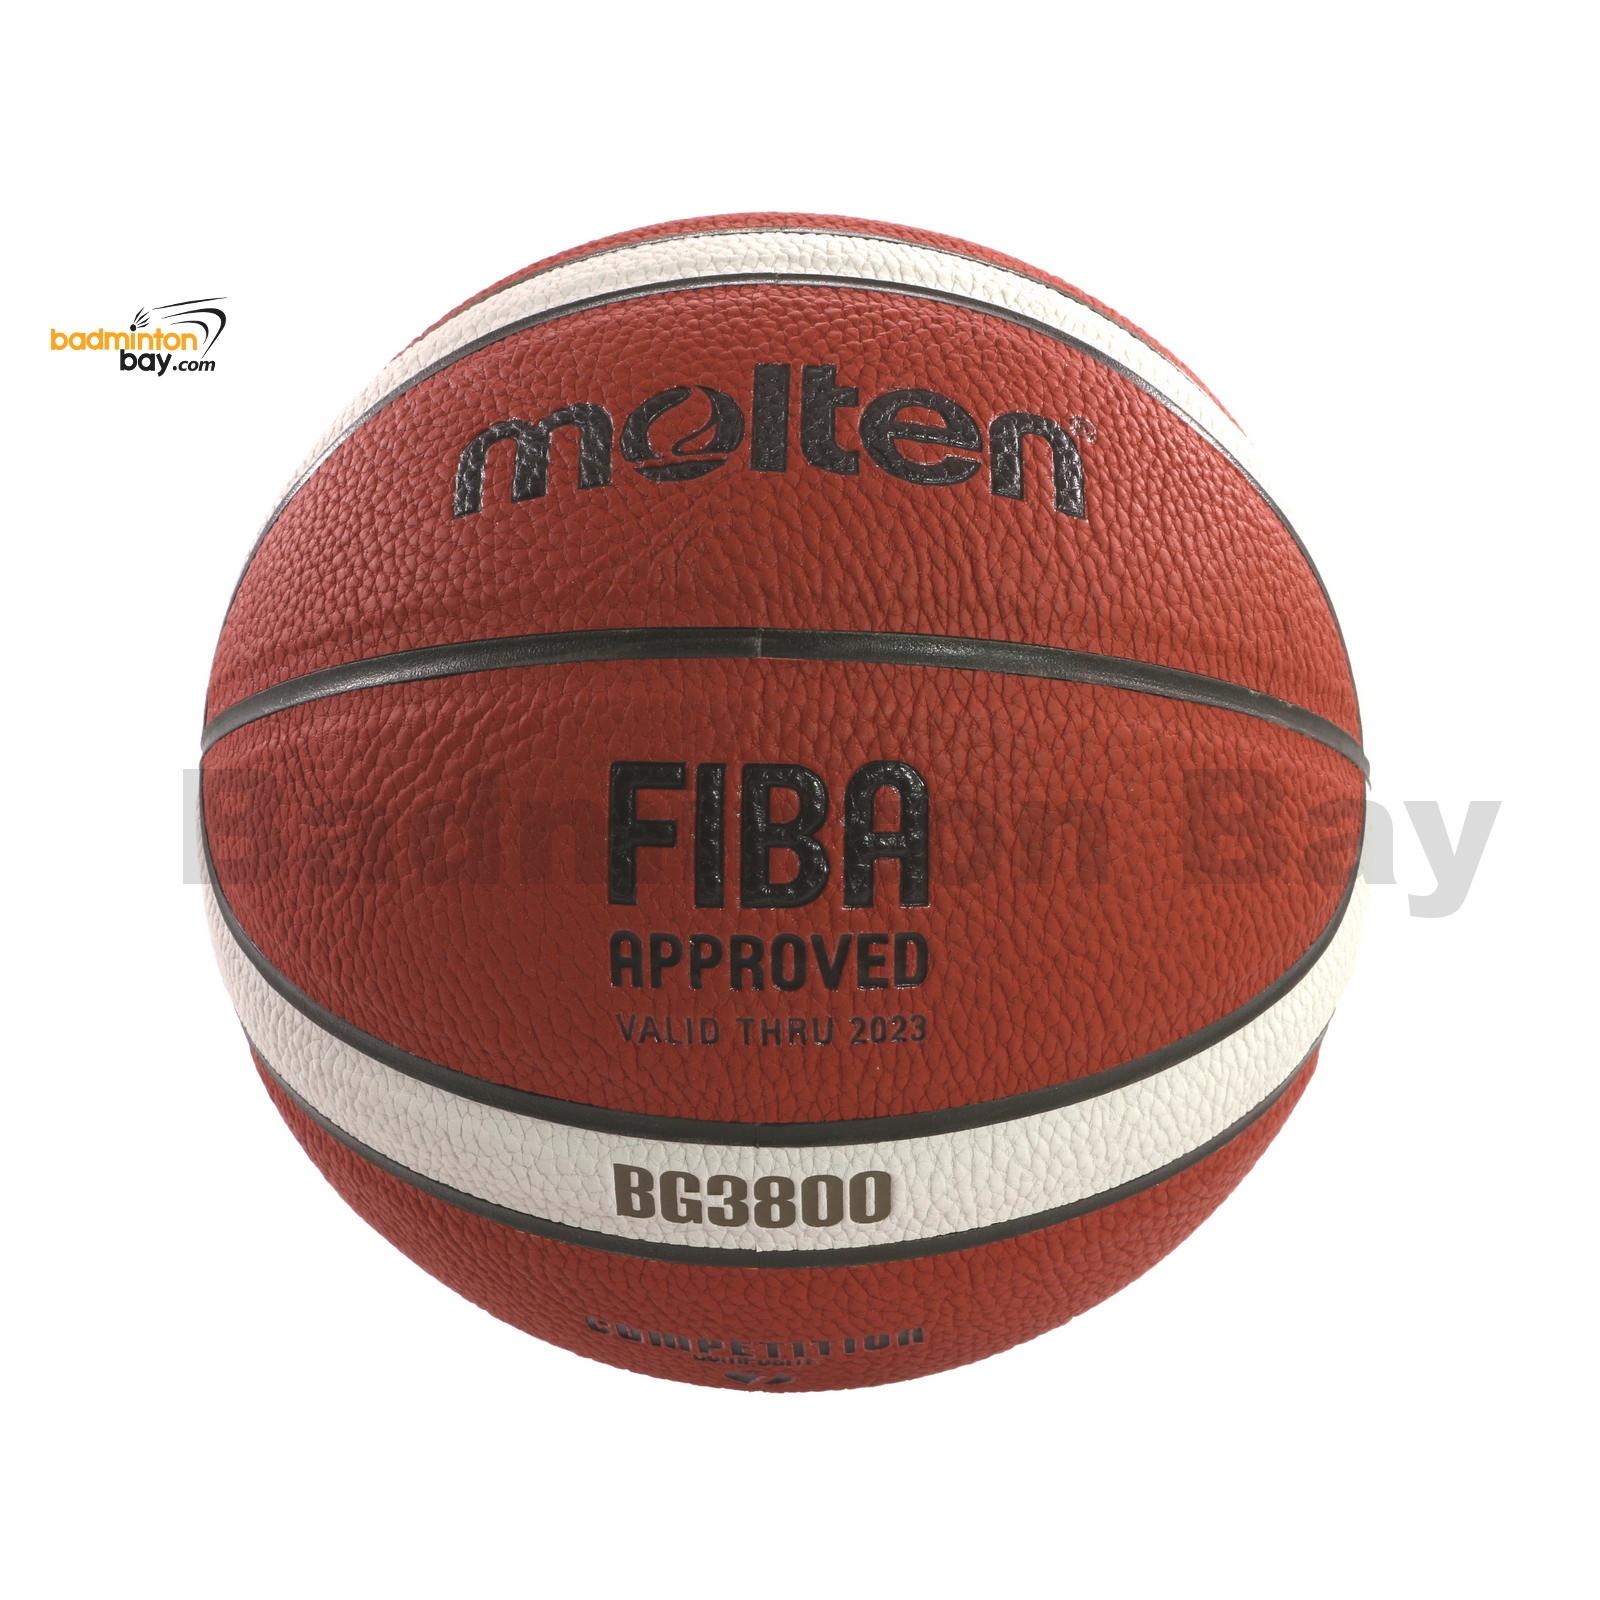 Molten Fiba Gr 7 Basketball Orange Size 7 